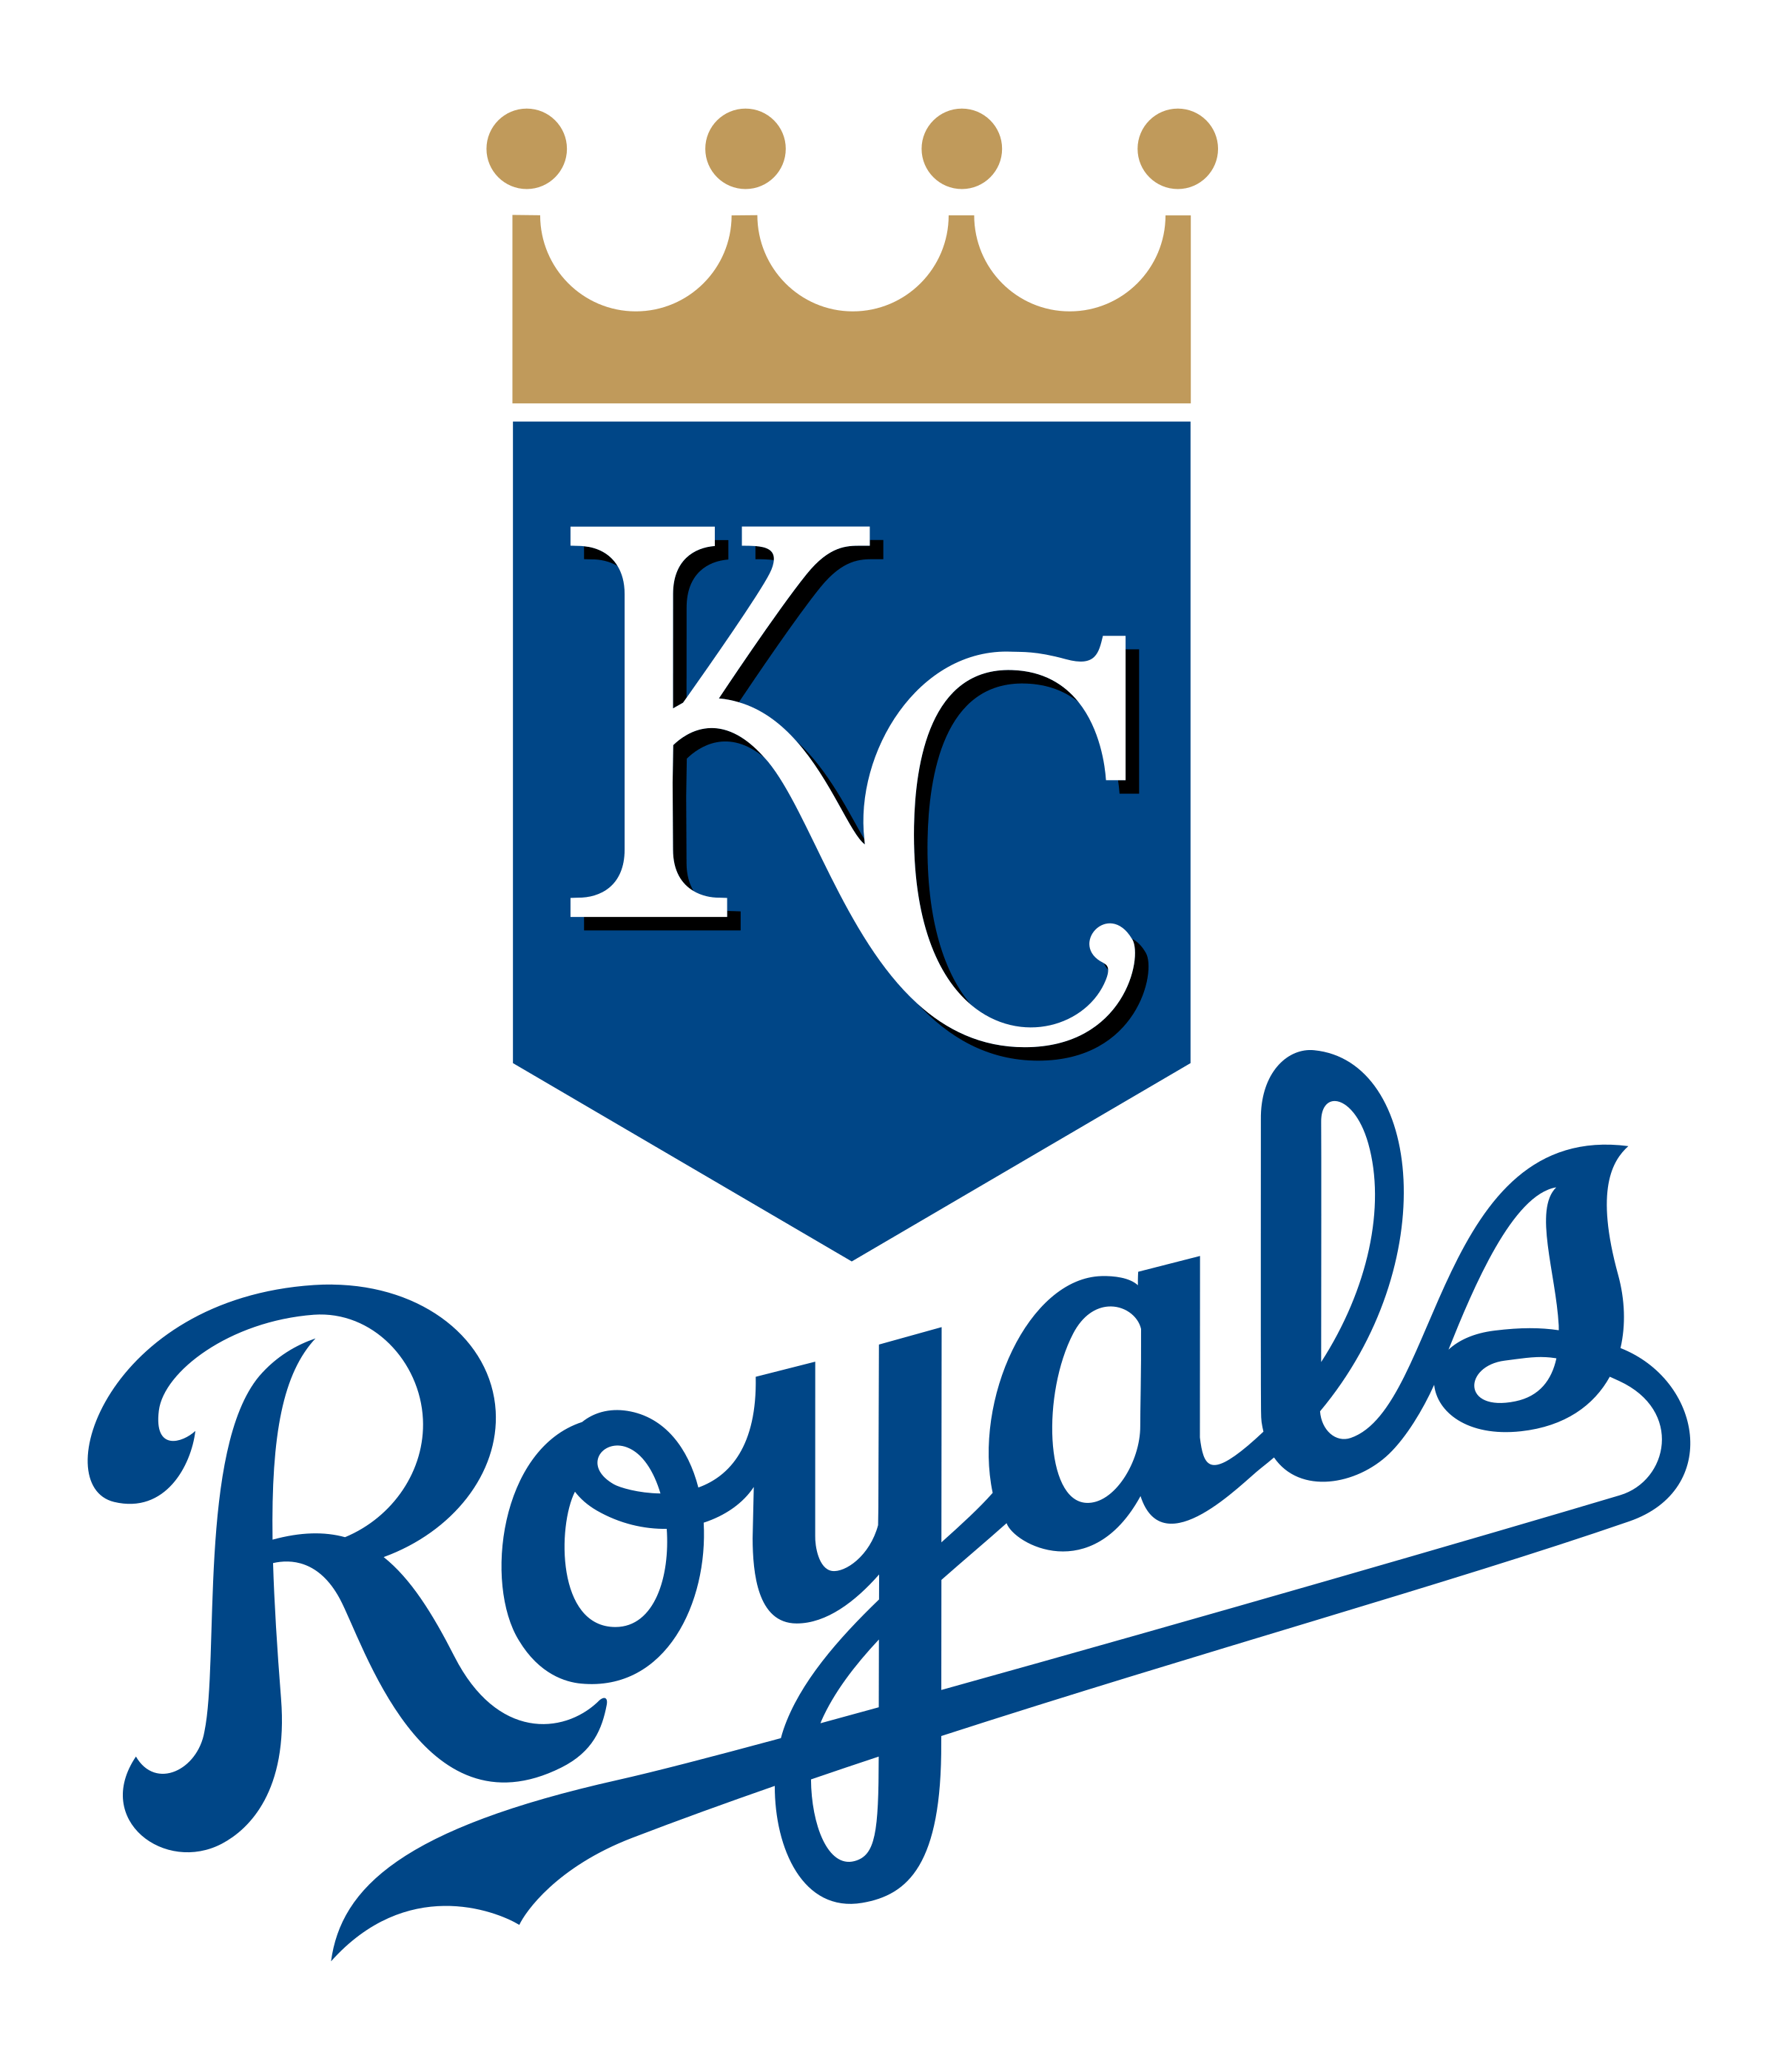 All Royals Logo - Kansas City Royals Logo PNG Transparent & SVG Vector - Freebie Supply